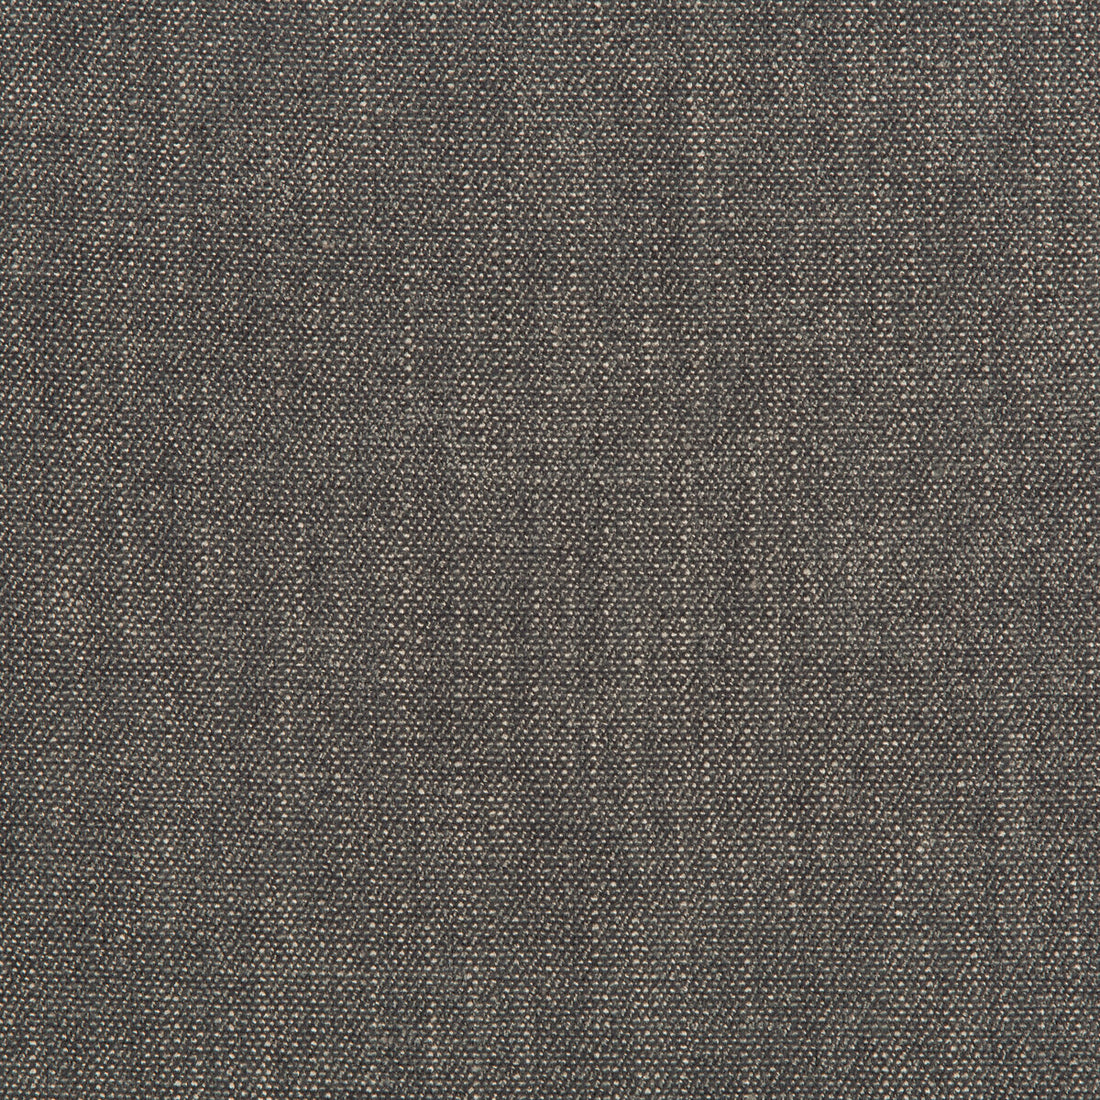 Kravet Smart fabric in 34313-11 color - pattern 34313.11.0 - by Kravet Smart